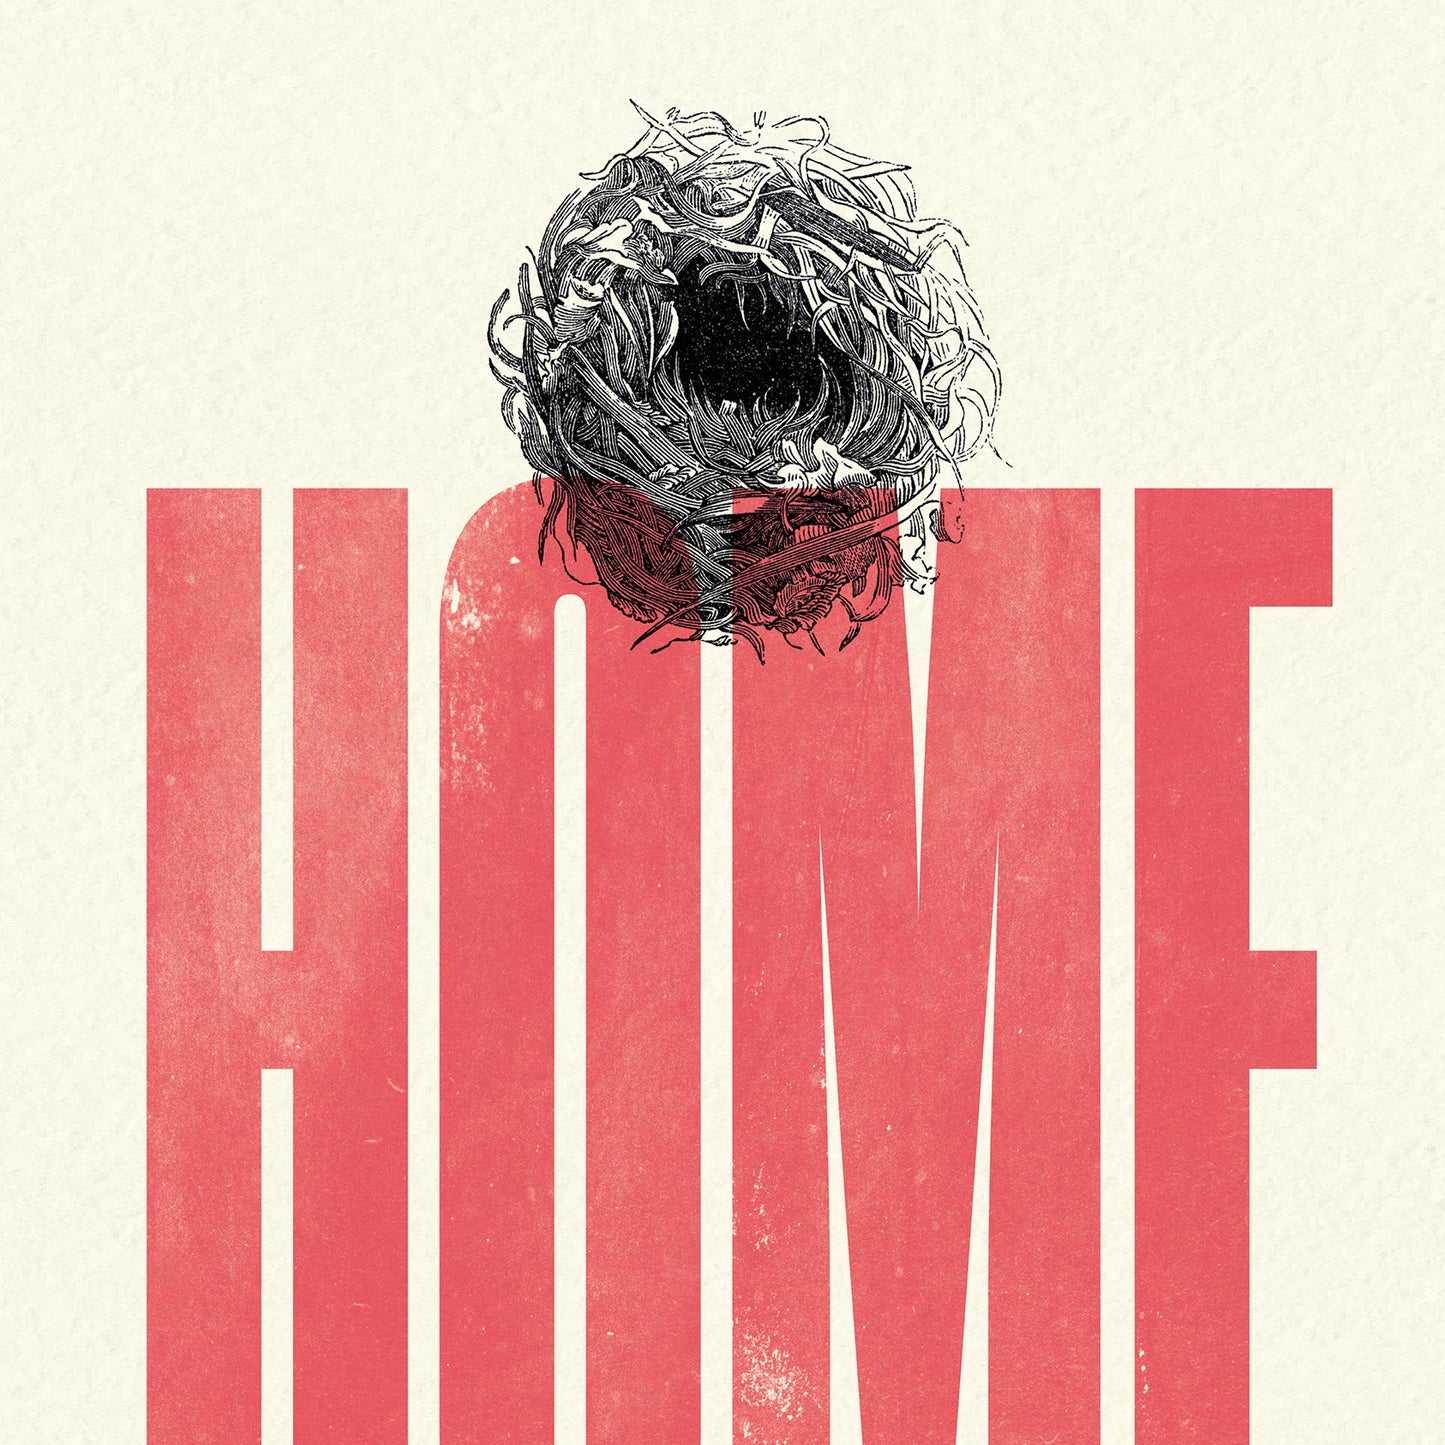 Modern Life A3 print: Home Sweet Home